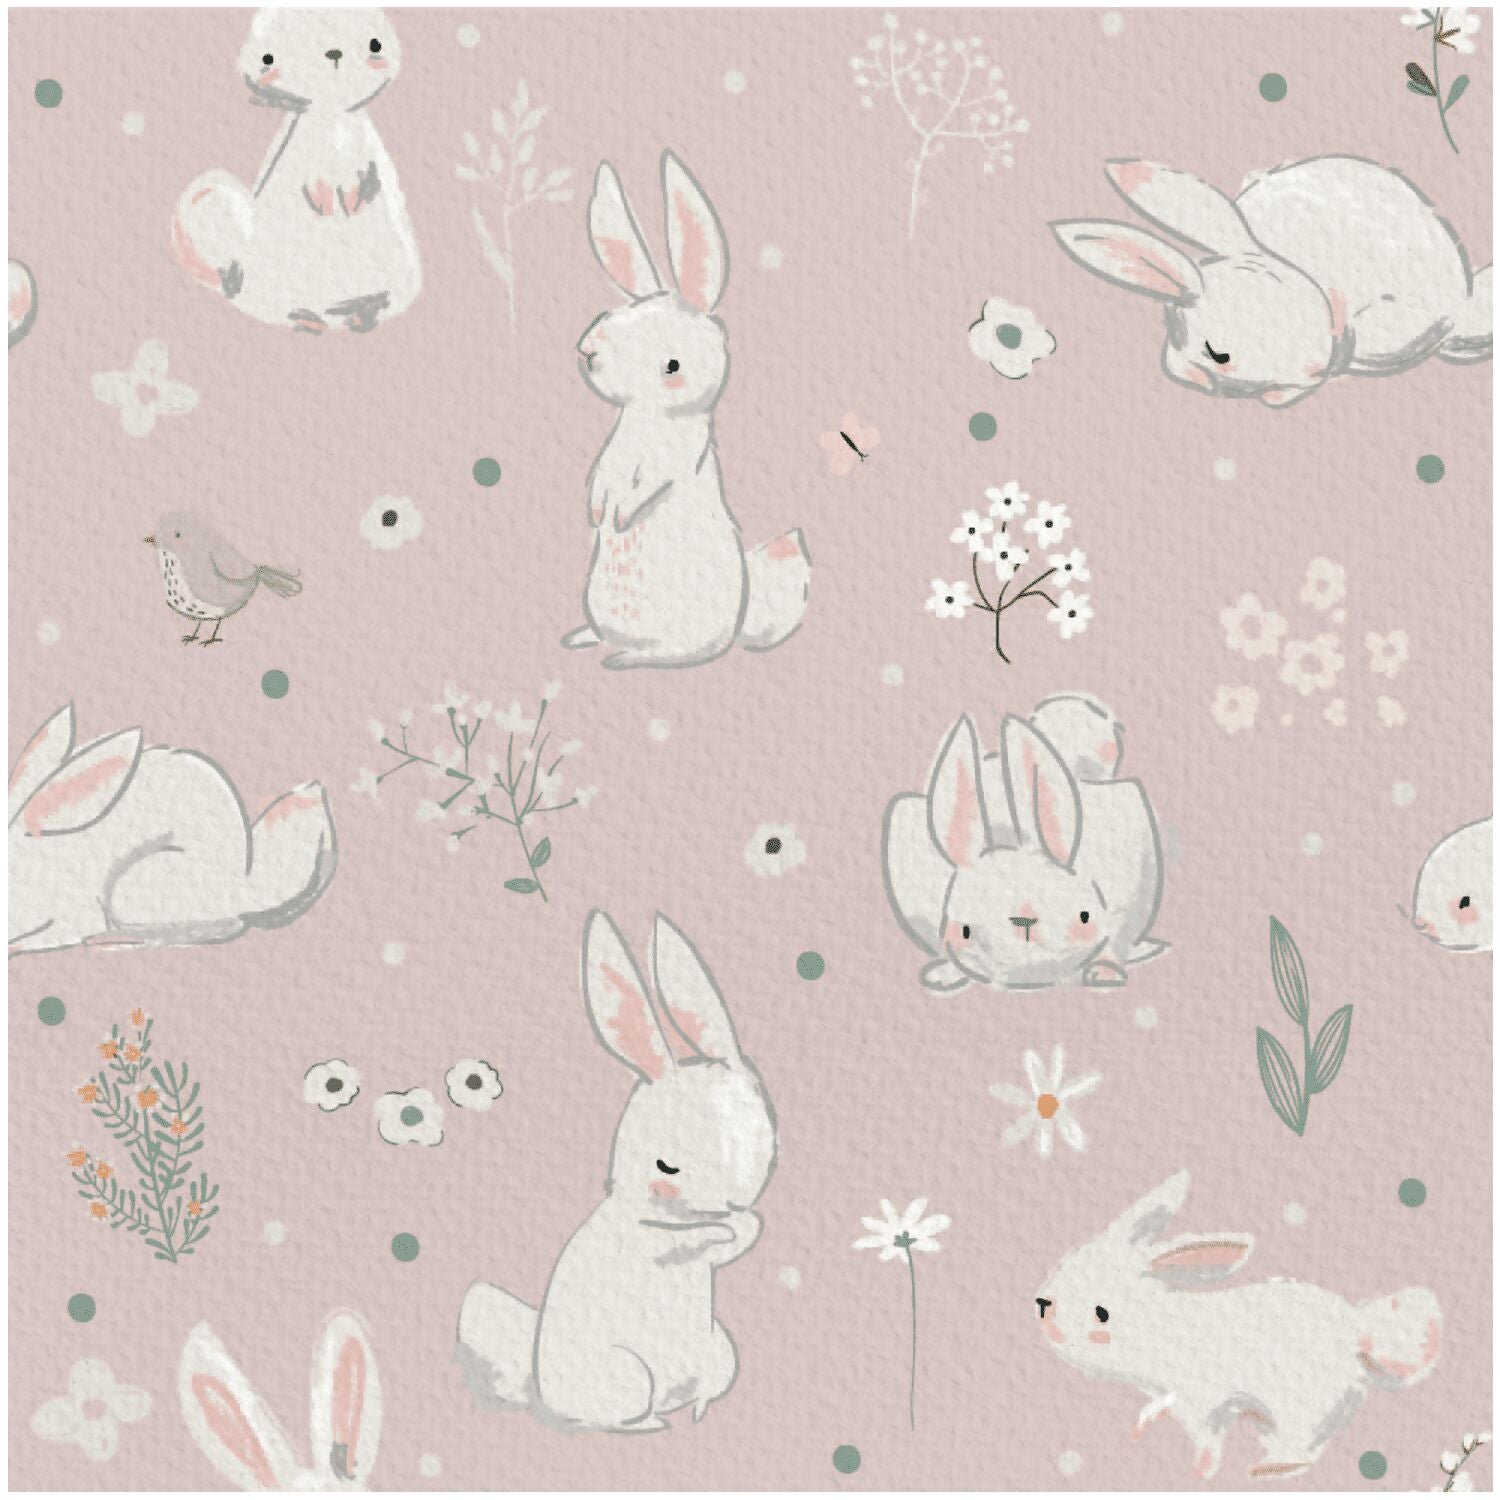 A Pedido Papel Mural Texturizado Conejos Rosa